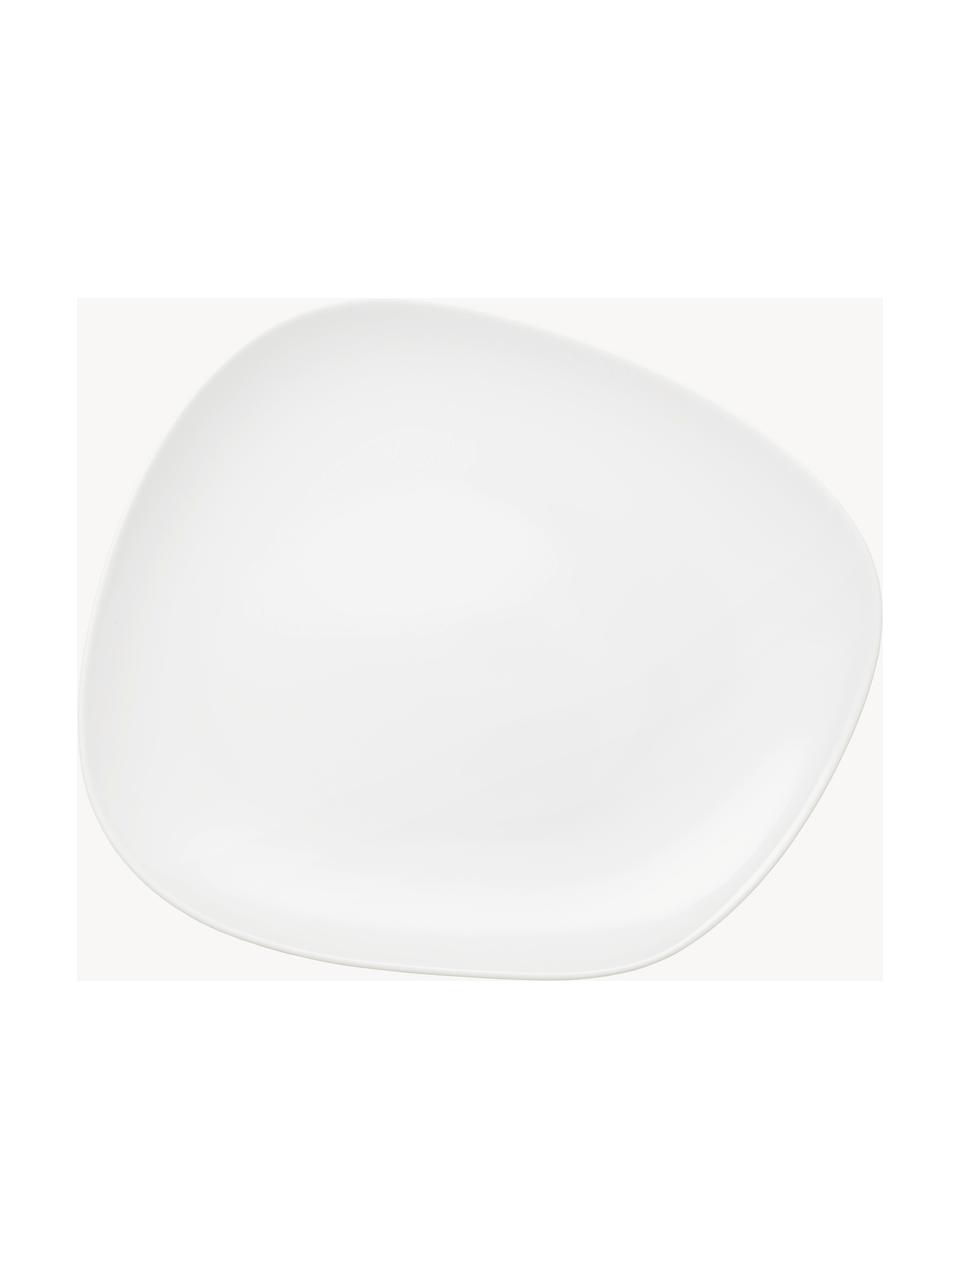 Vajilla de porcelana Organic, 4 comensales (12 pzas.), Porcelana, Blanco, Set de diferentes tamaños